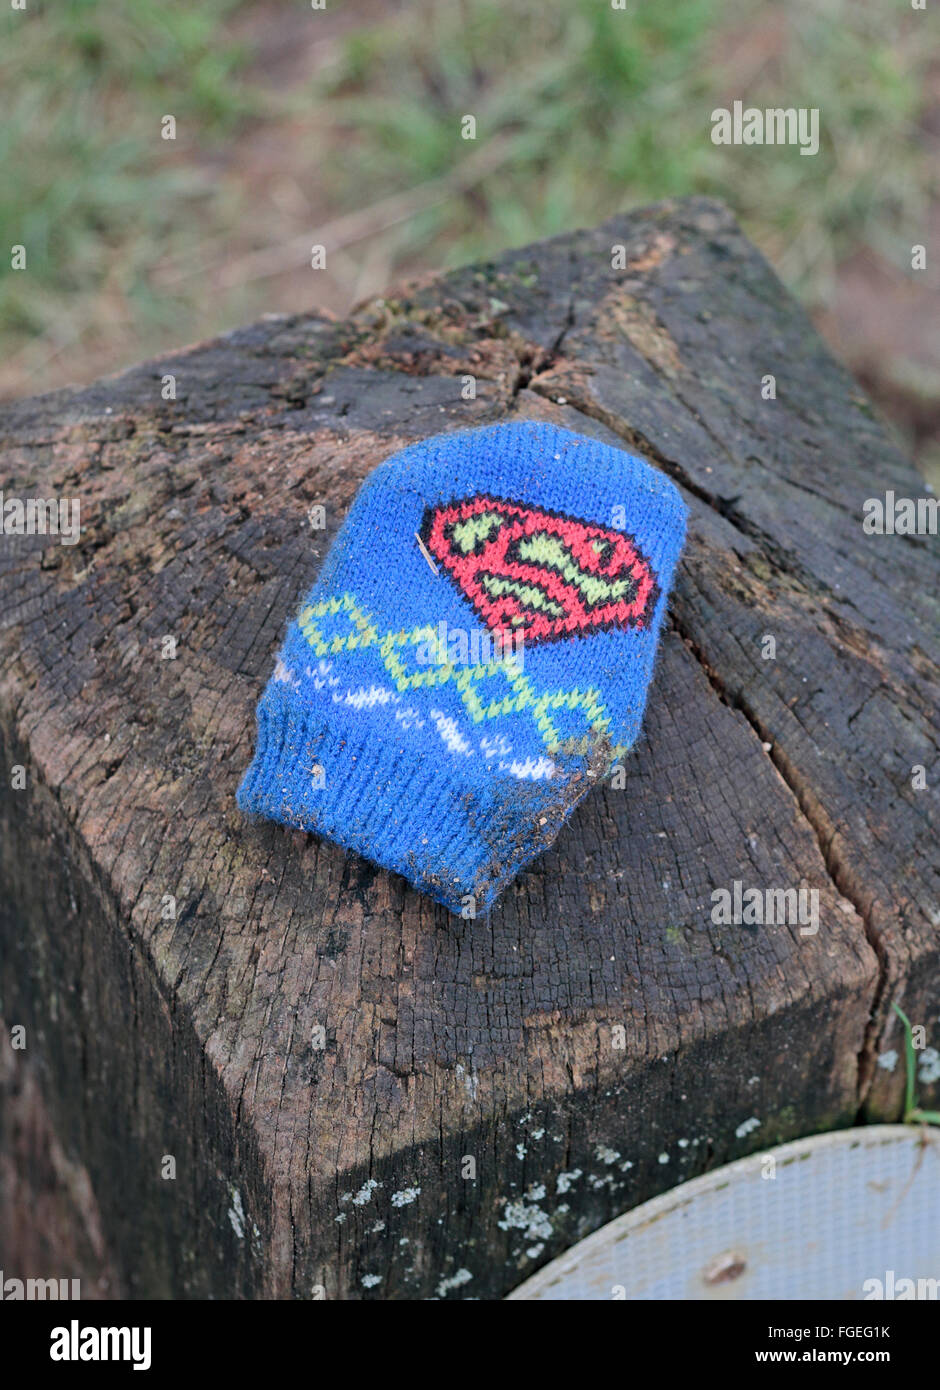 A child's lost glove sitting on a wooden post in Bushy Park, near Kingston, UK. Stock Photo